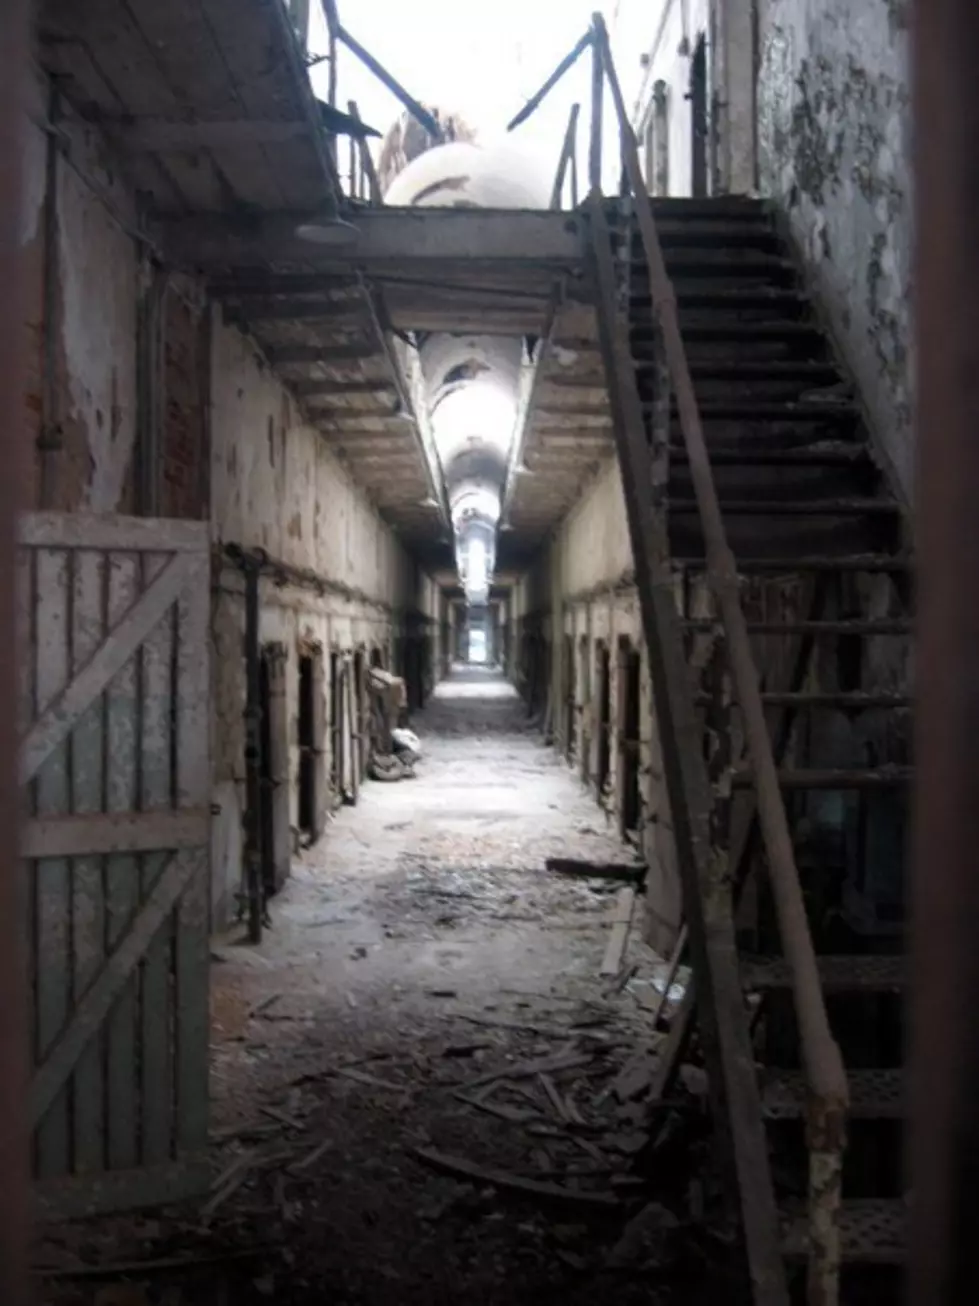 Eastern State Penitentiary Shares 2020 Halloween Season Plans